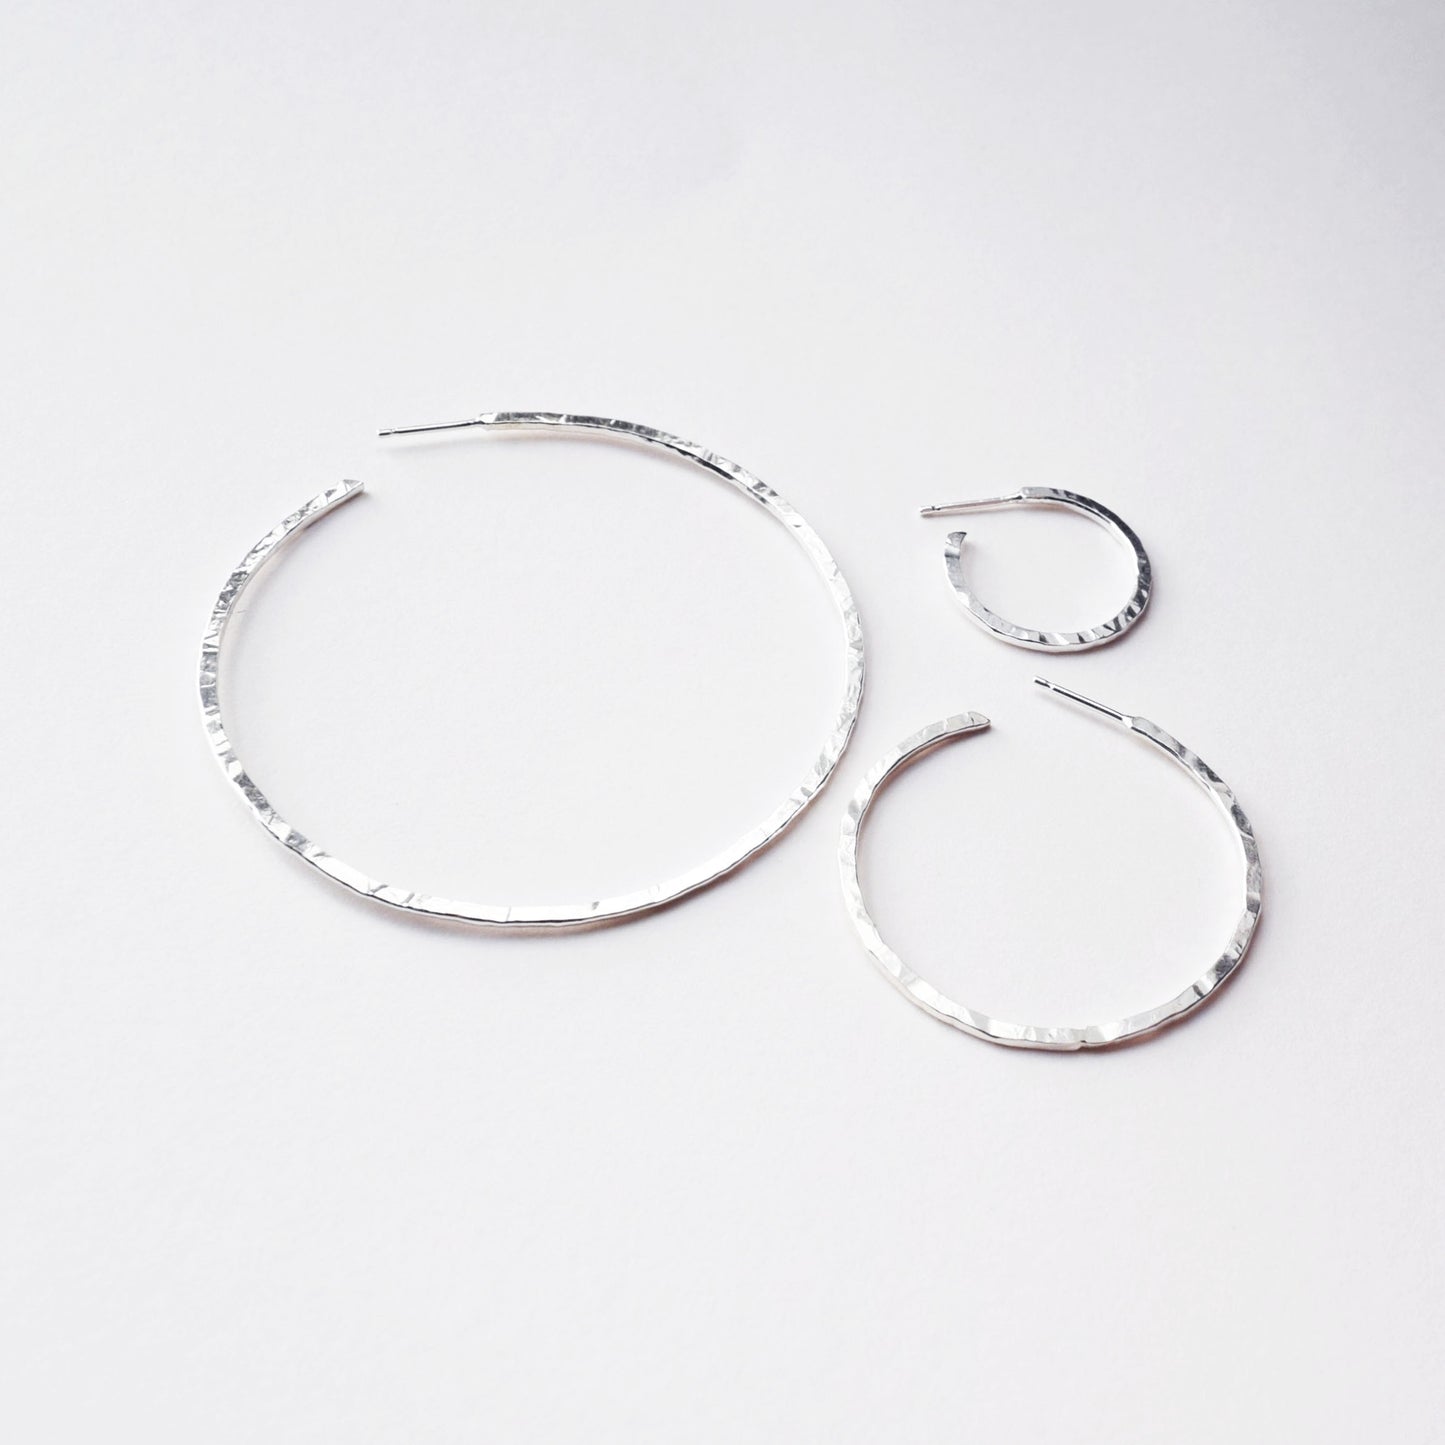 image shows three sizes of hoop earrings